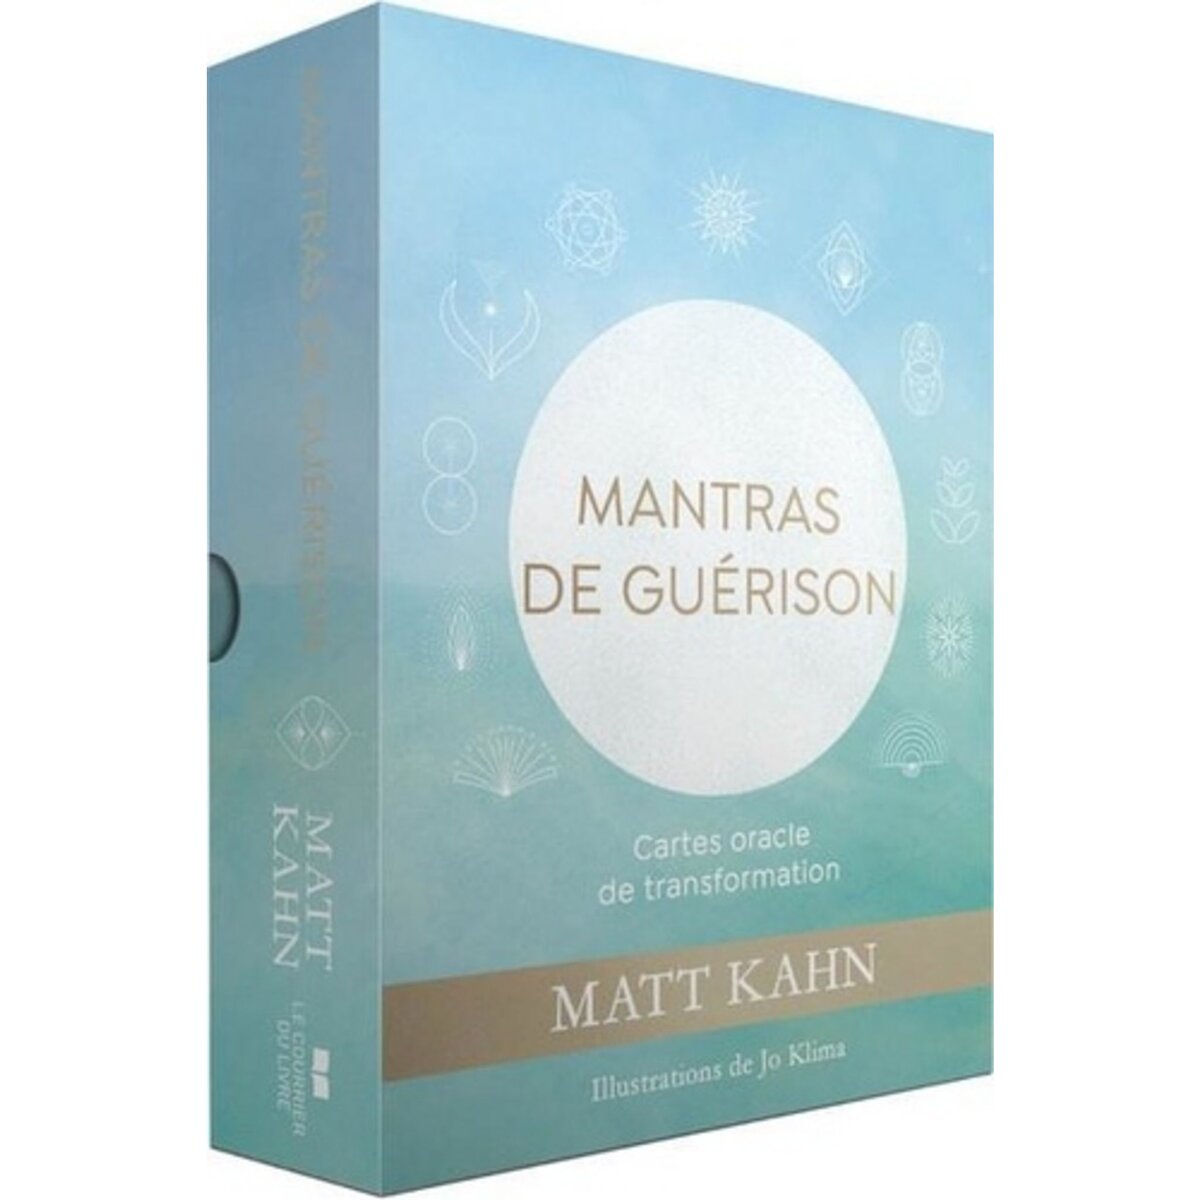  MANTRAS DE GUERISON. CARTES ORACLE DE TRANSFORMATION, Kahn Matt